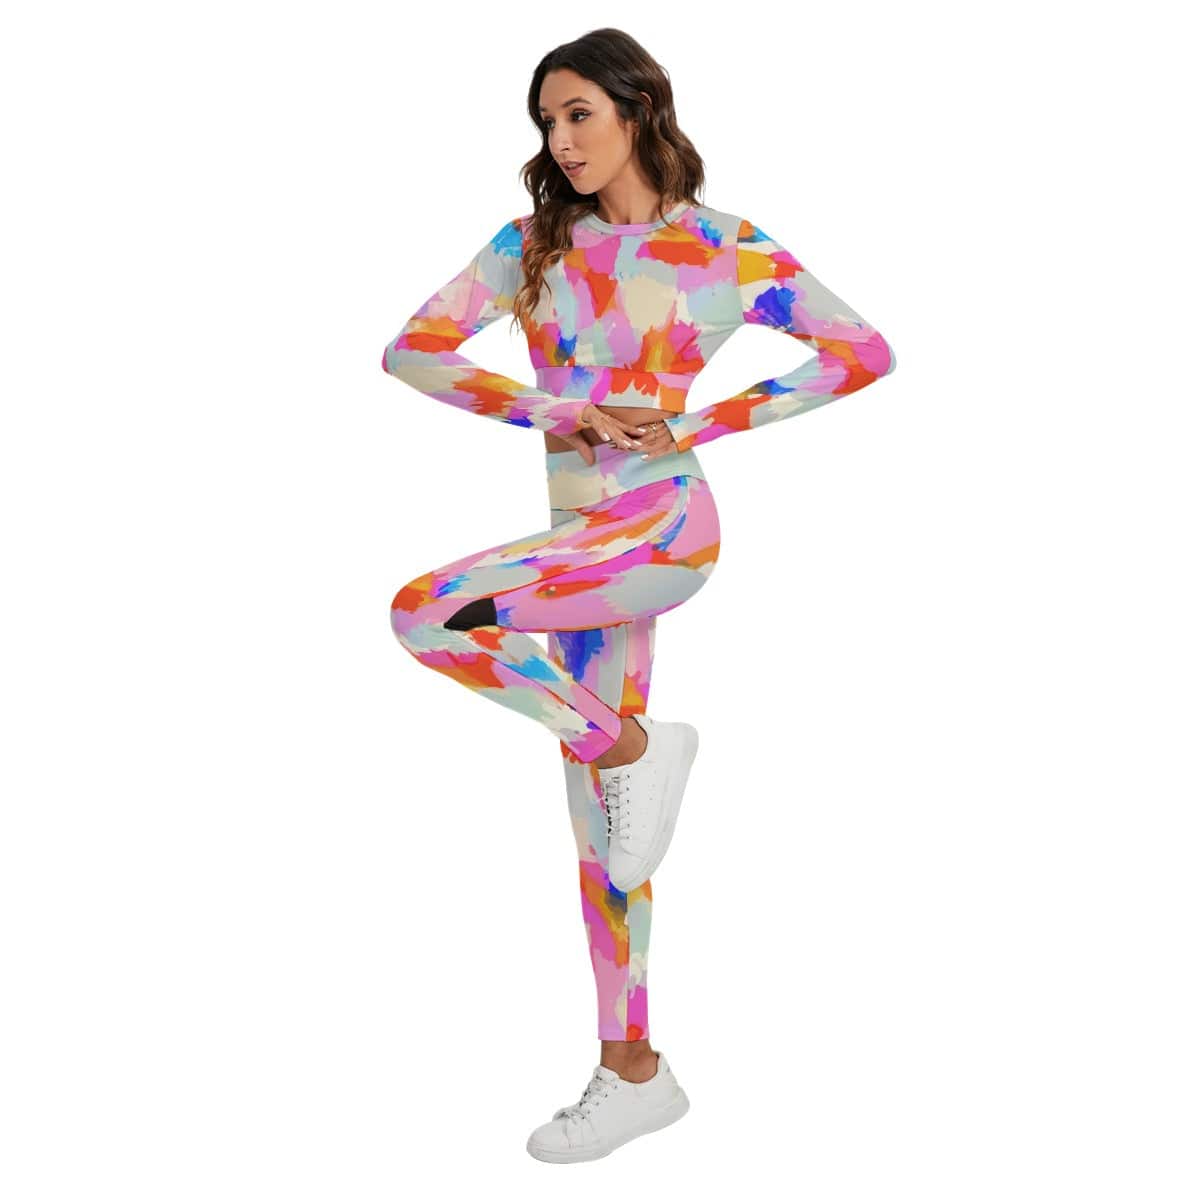 Yoycol activewear Bright Mod - Women's Sport 2 pc Set